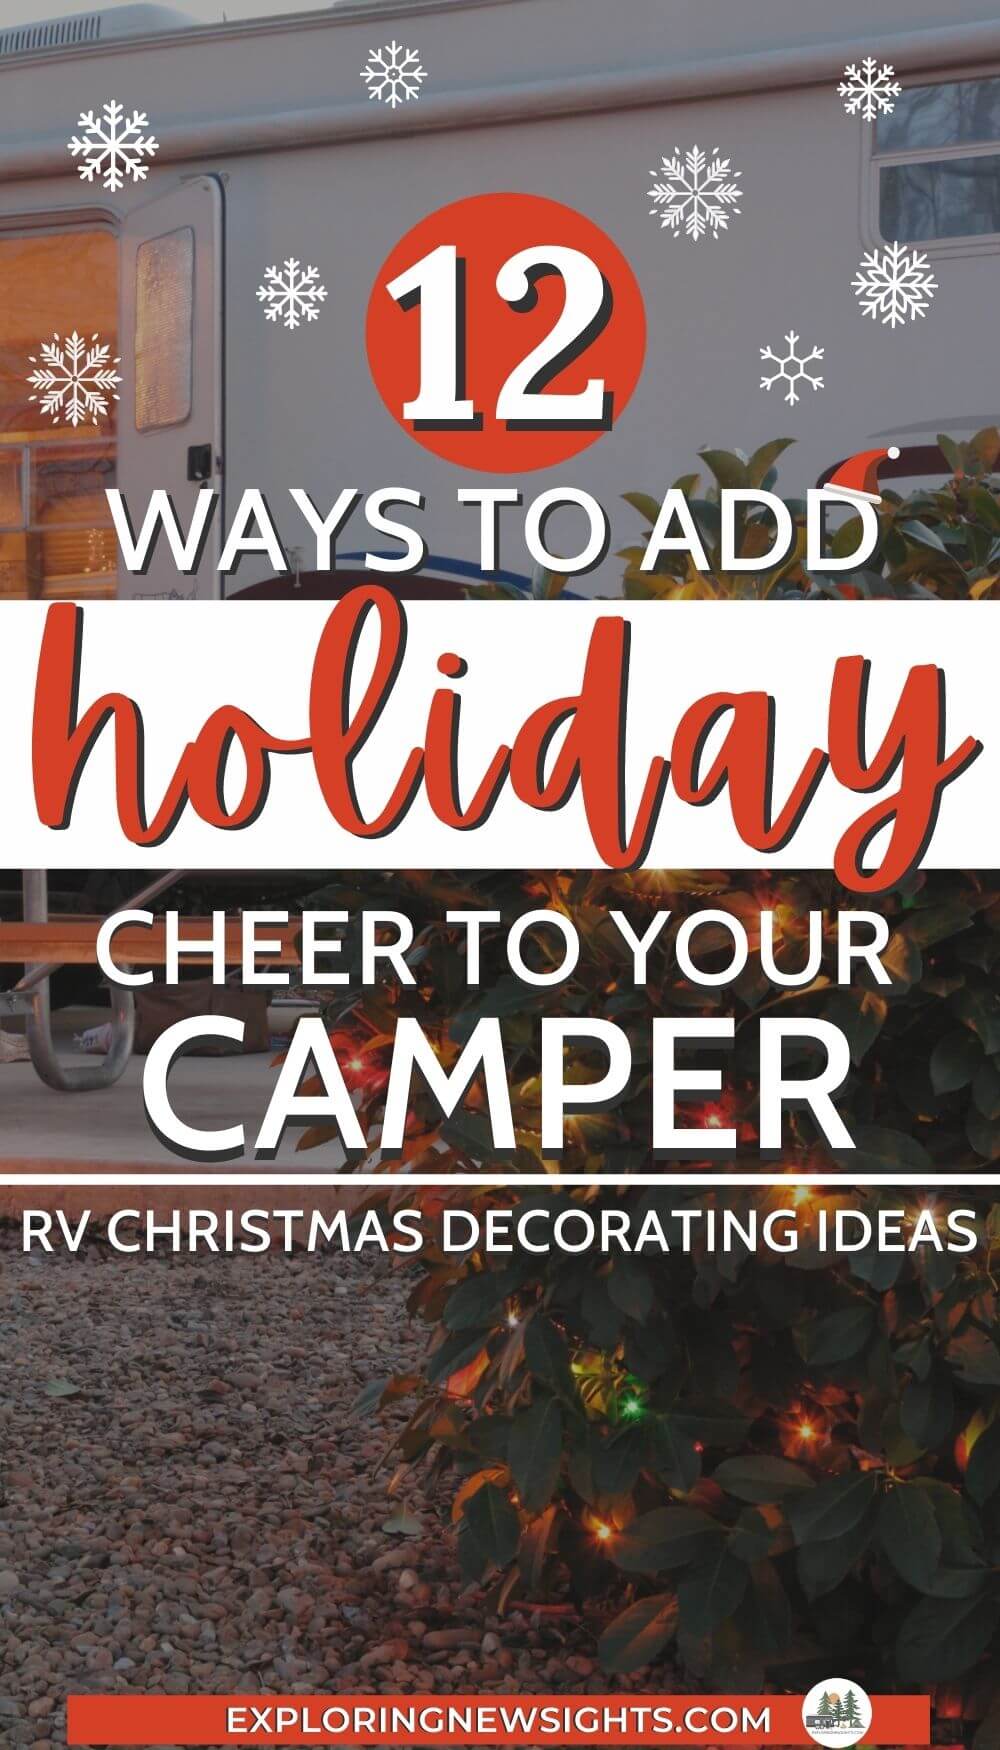 RV Christmas Decorating Ideas